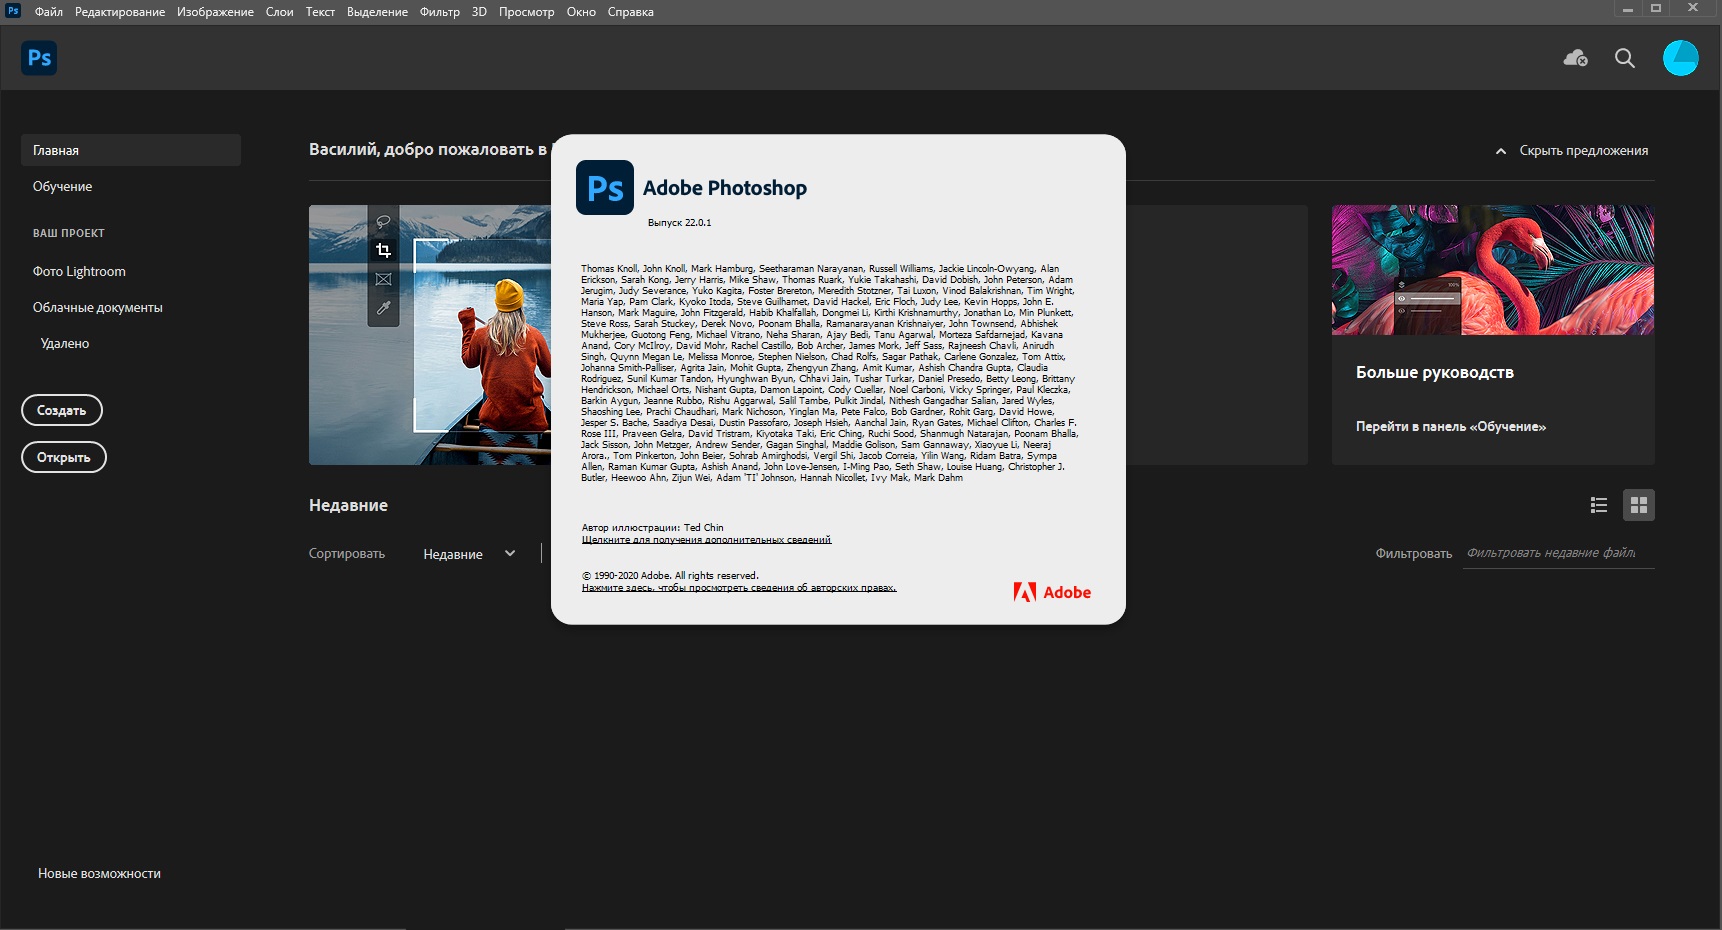 Adobe Photoshop CC 14.0 Final - Rus / 1.26 GB